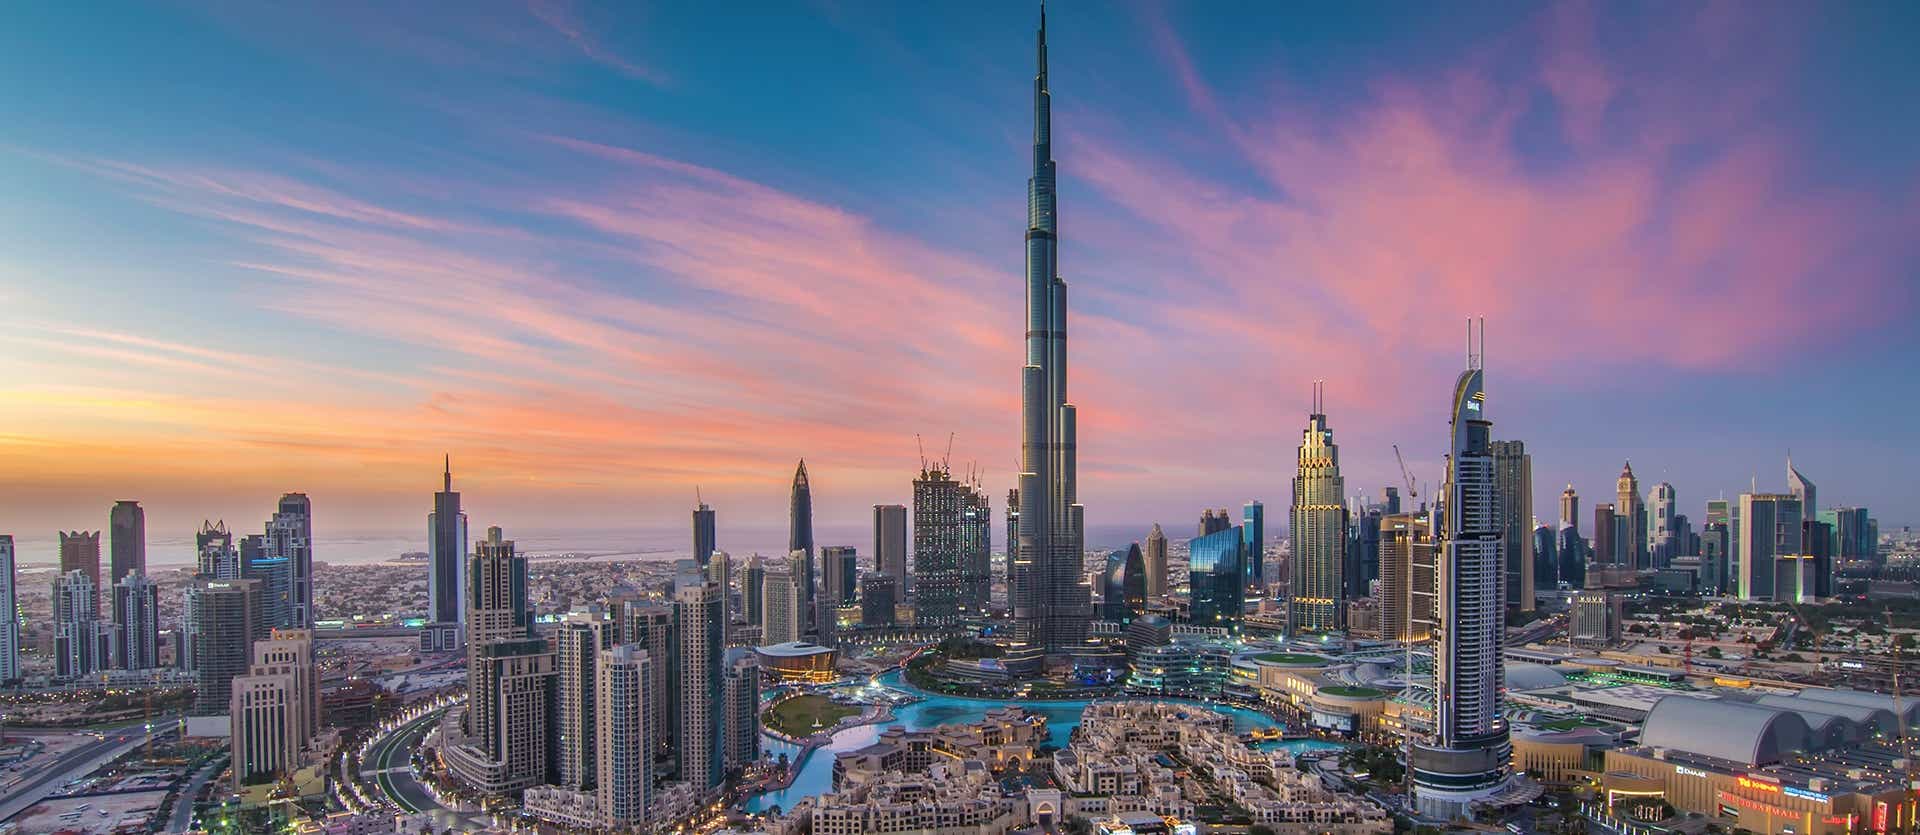 Dubai Skyline <span class="iconos separador"></span> United Arab Emirates